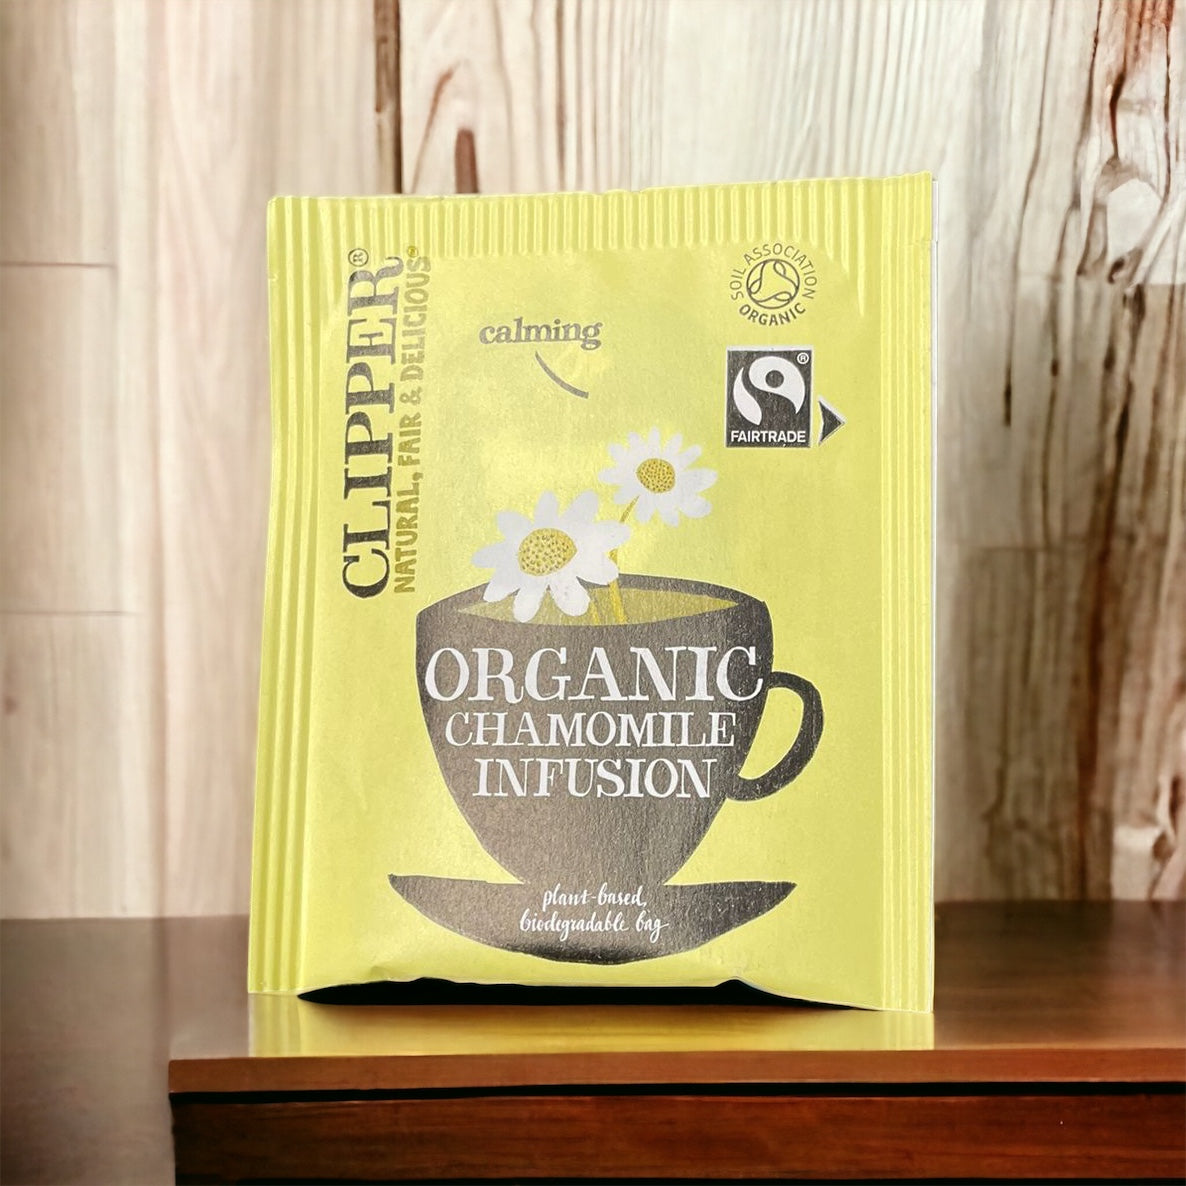 Clipper Fairtrade Organic Infusion Chamomile tea bags (x3)